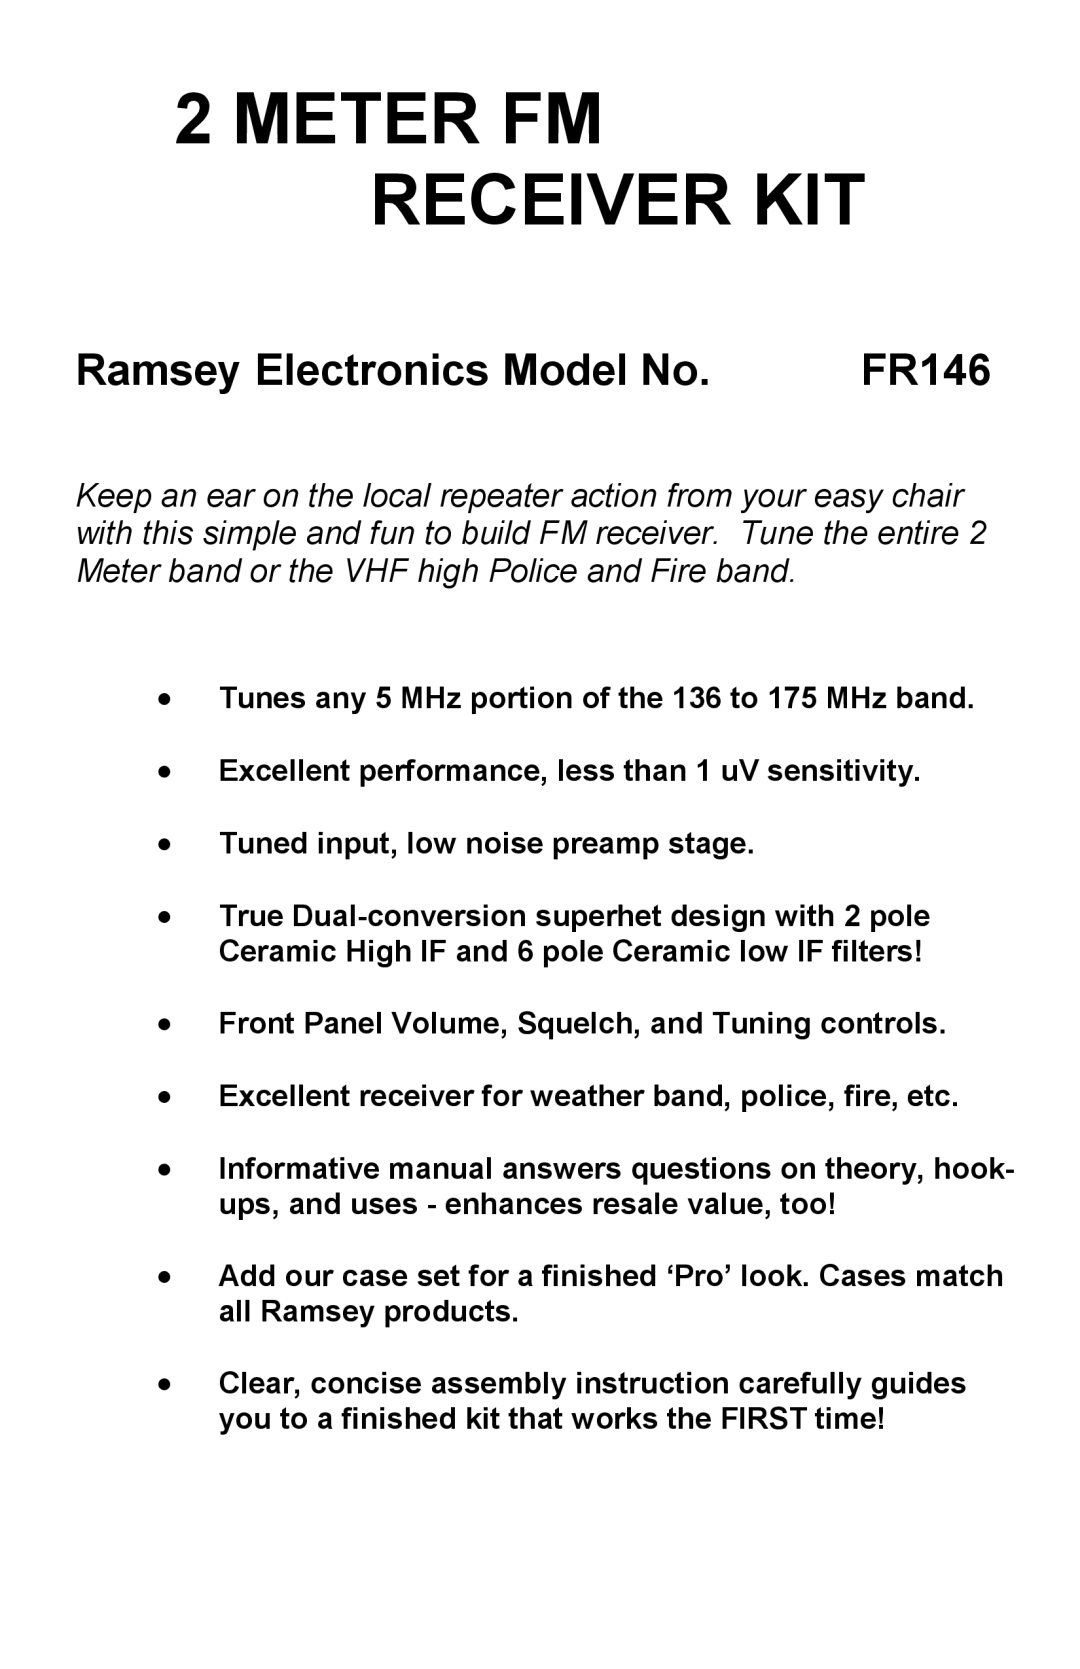 Ramsey Electronics FR146 manual Meter Fm Receiver Kit, Ramsey Electronics Model No 